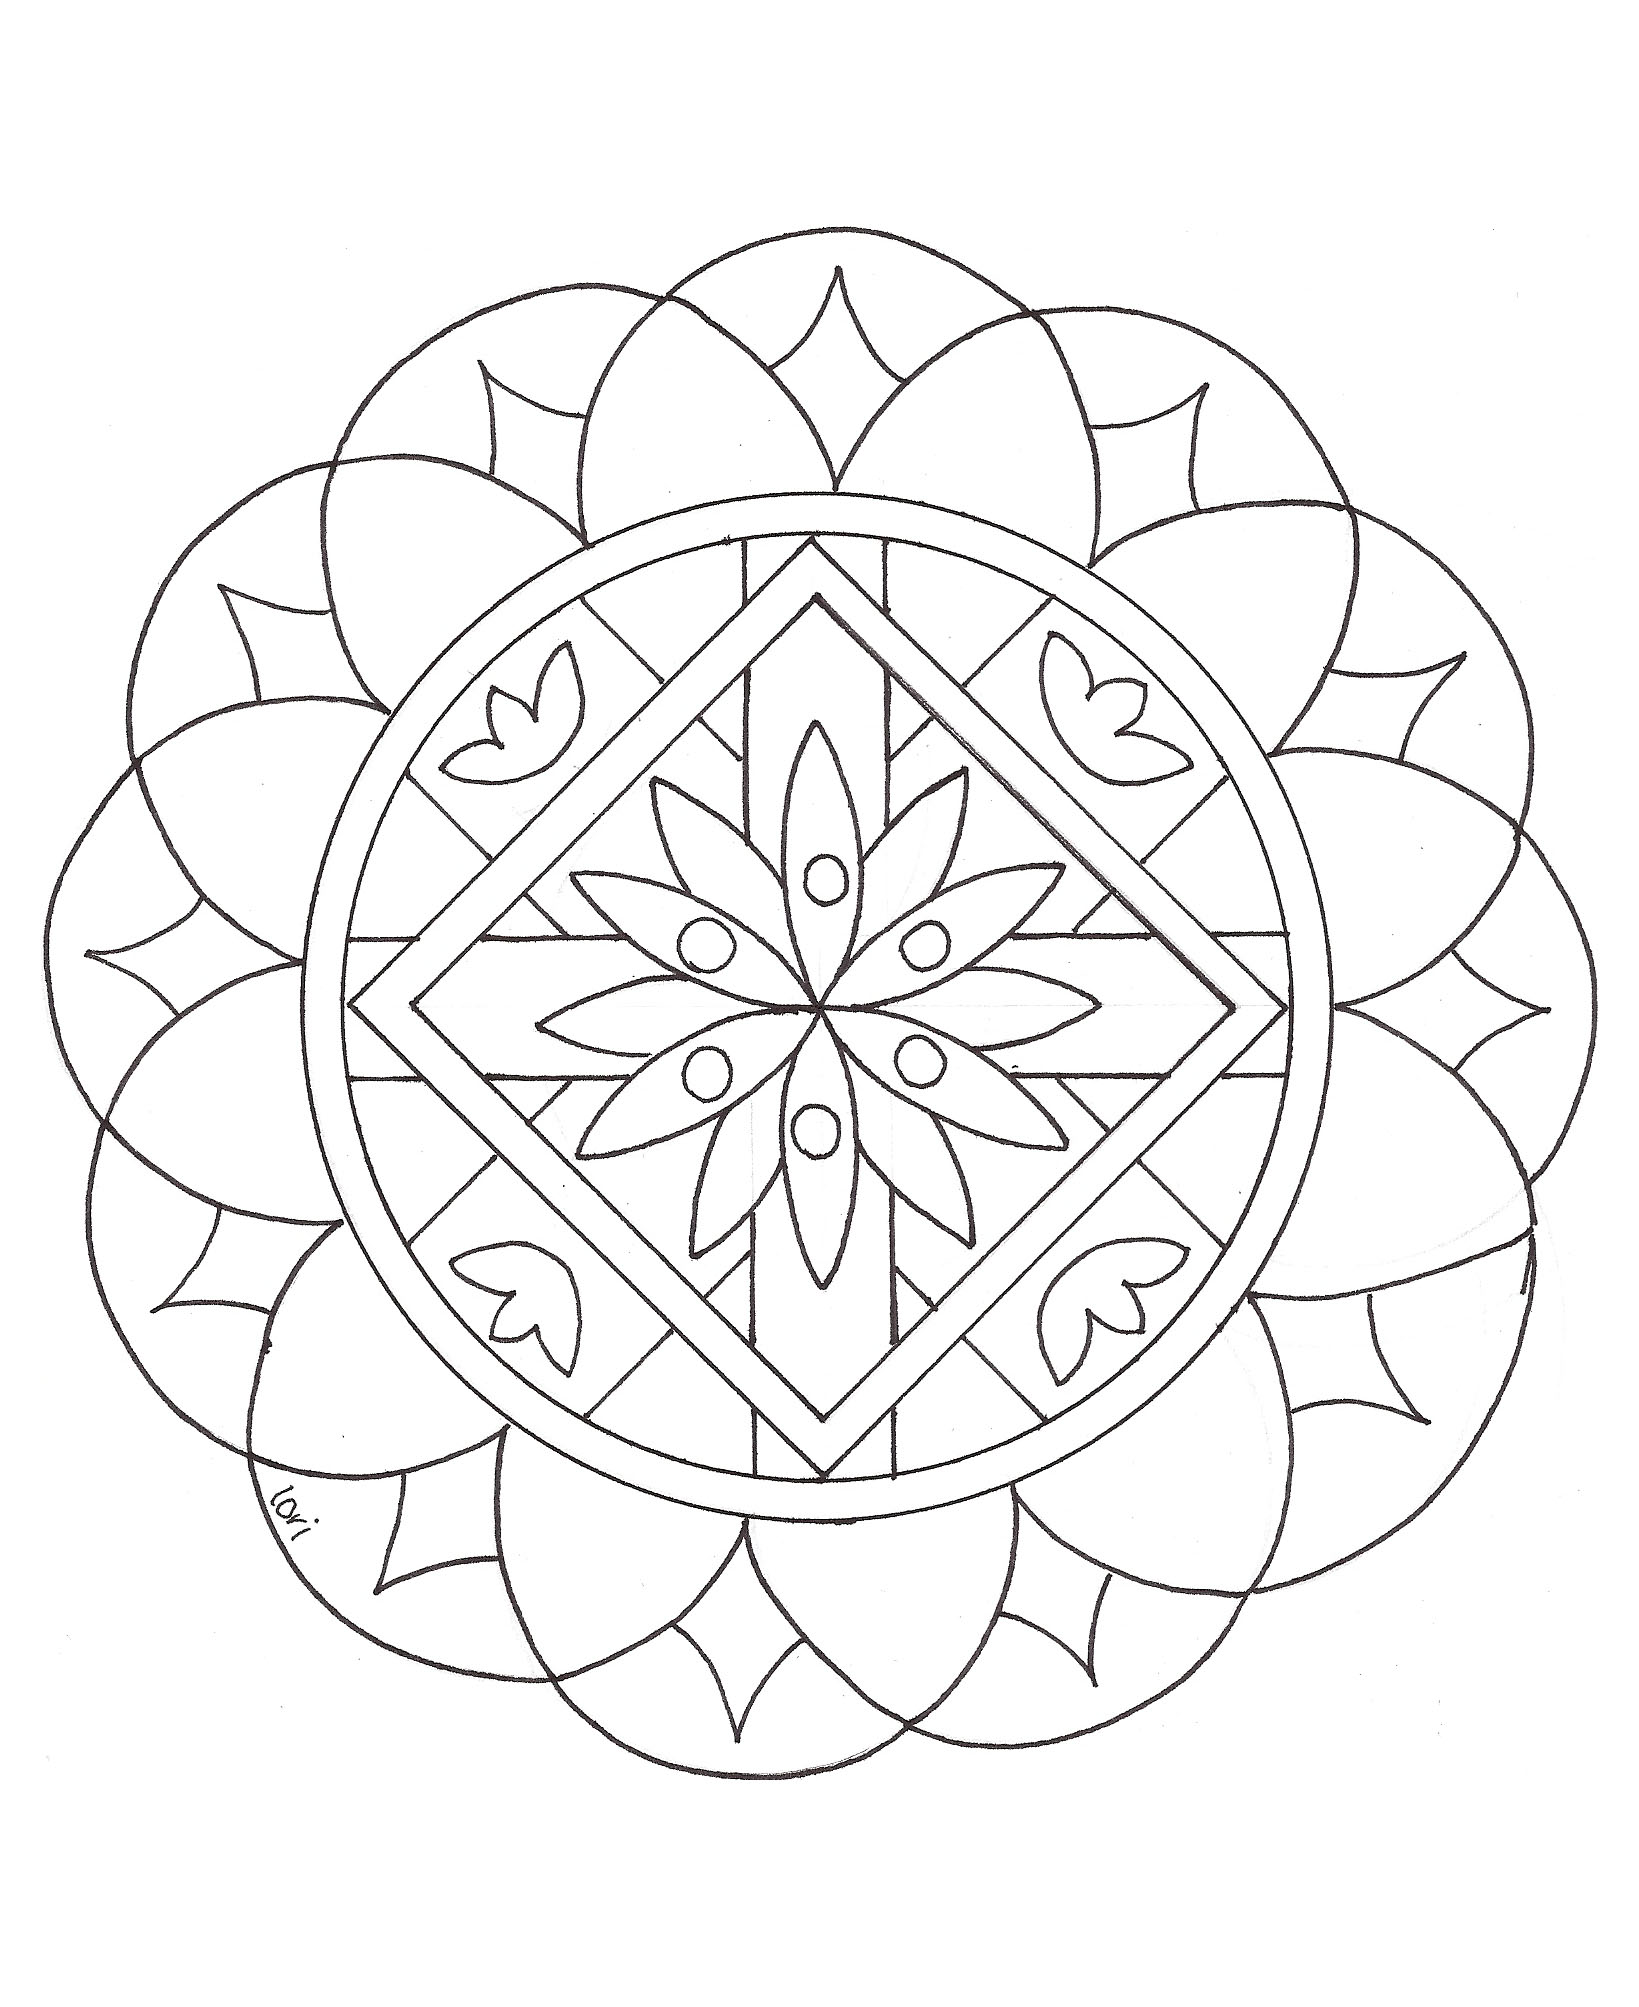 Simple mandala 2 Mandalas Coloring pages for kids to print & color